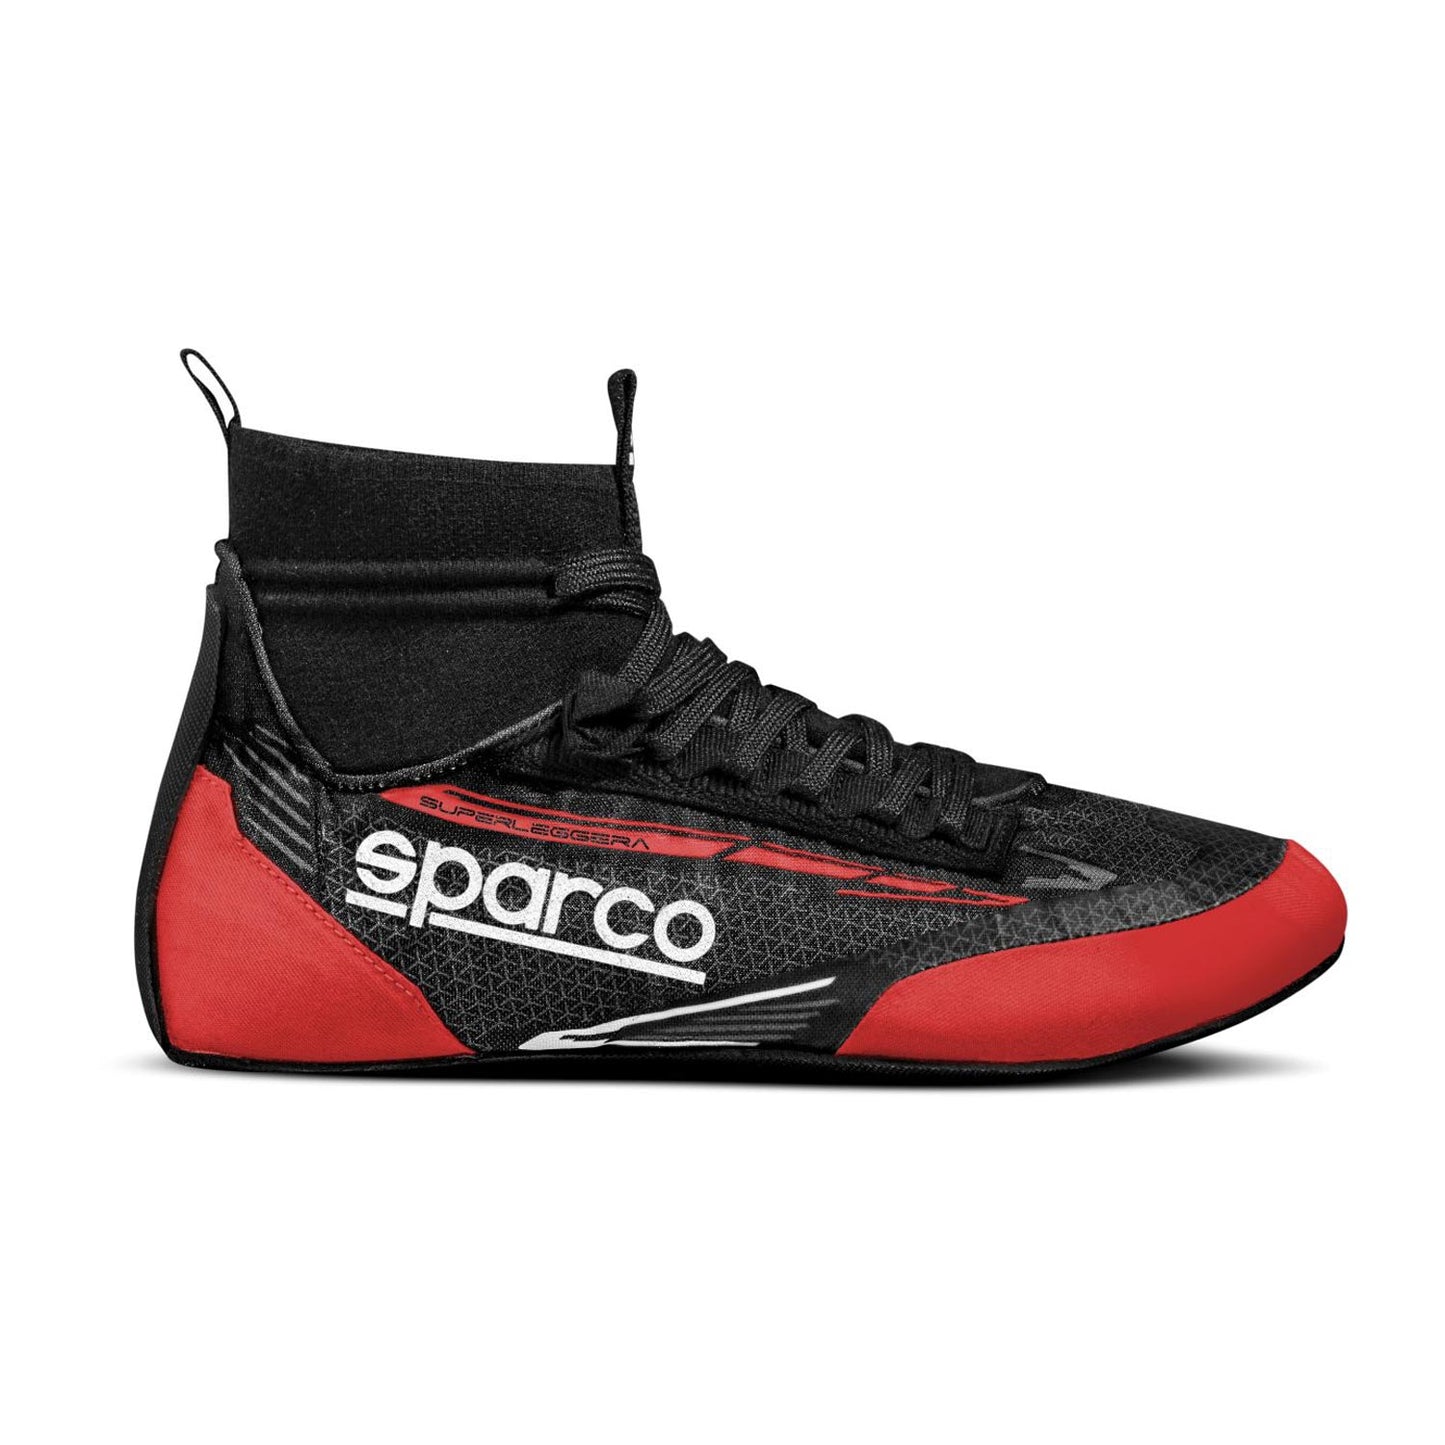 Sparco SUPERLEGGERA MY23 Racing Shoes (FIA)